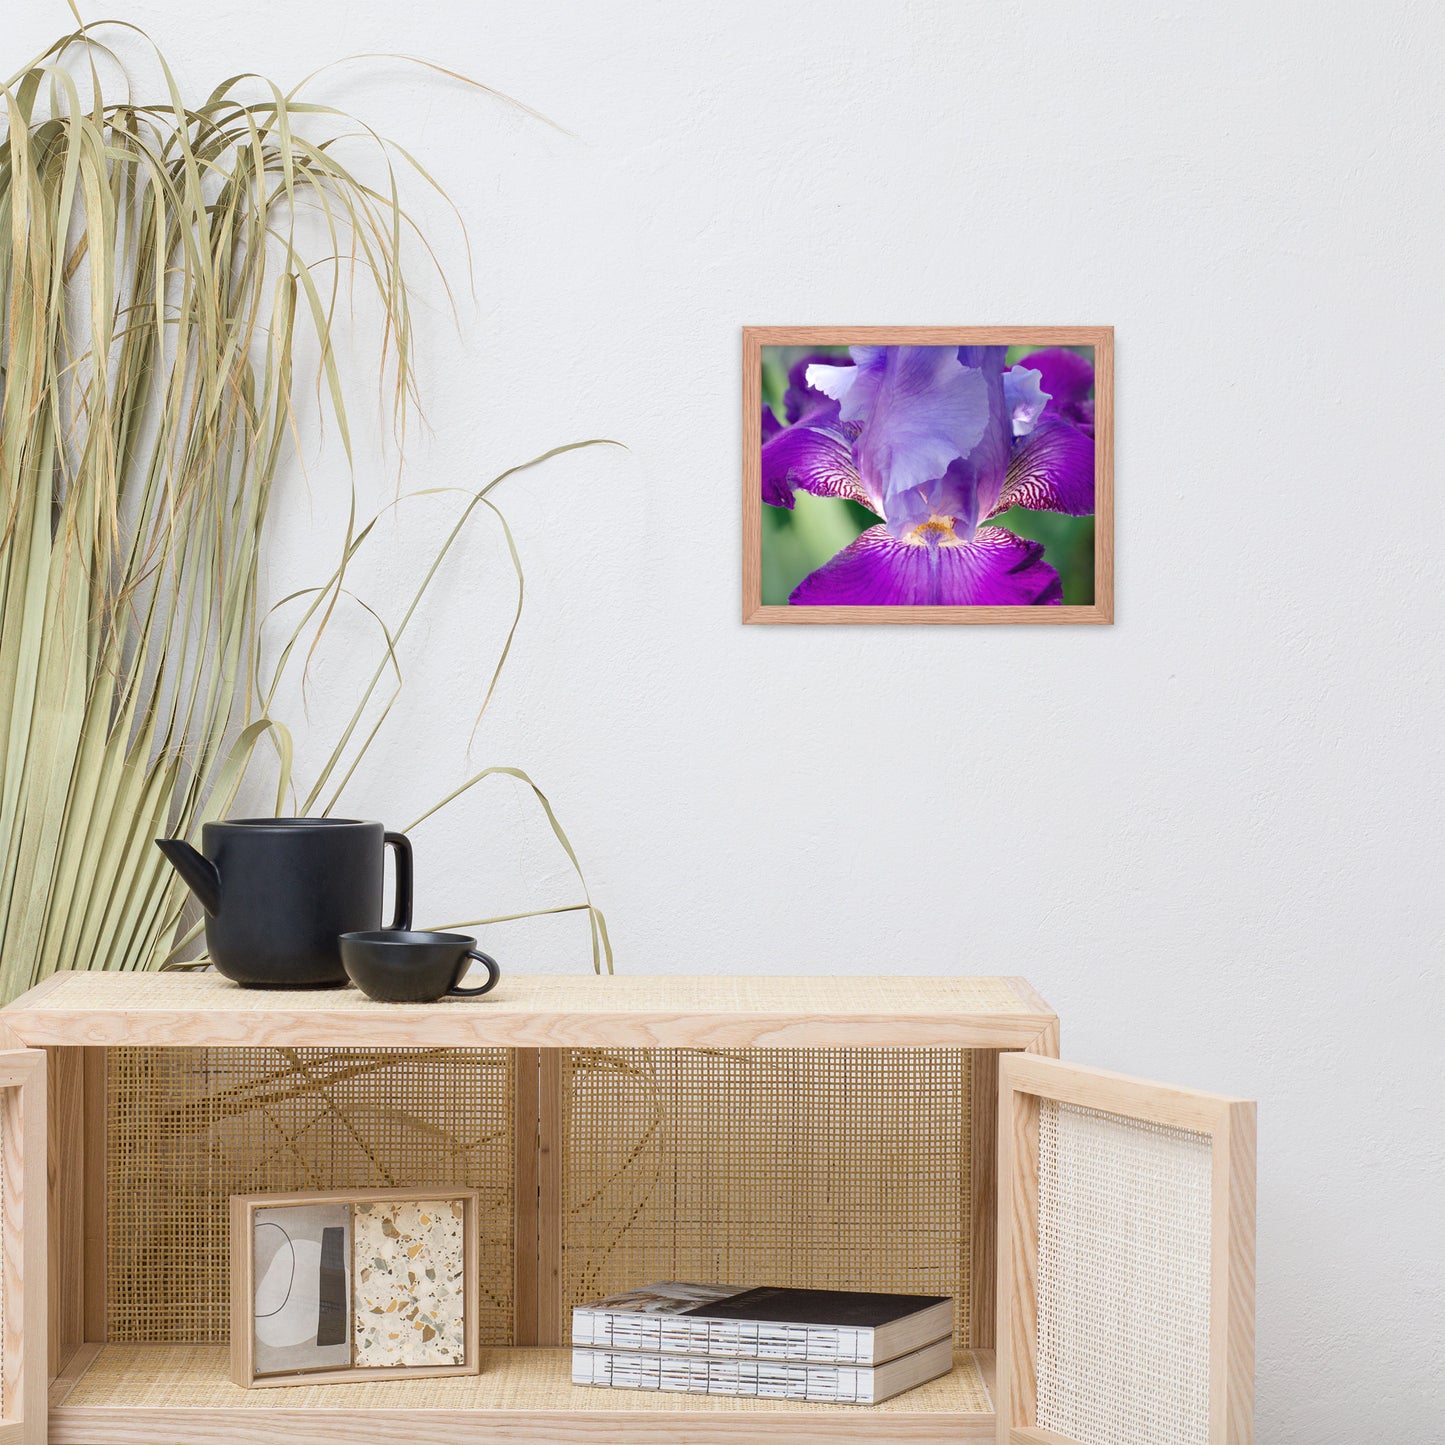 Bedroom Prints Etsy: Glowing Iris - Floral / Botanical / Nature Photo Framed Wall Art Print - Artwork - Wall Decor - Modern Home Decor